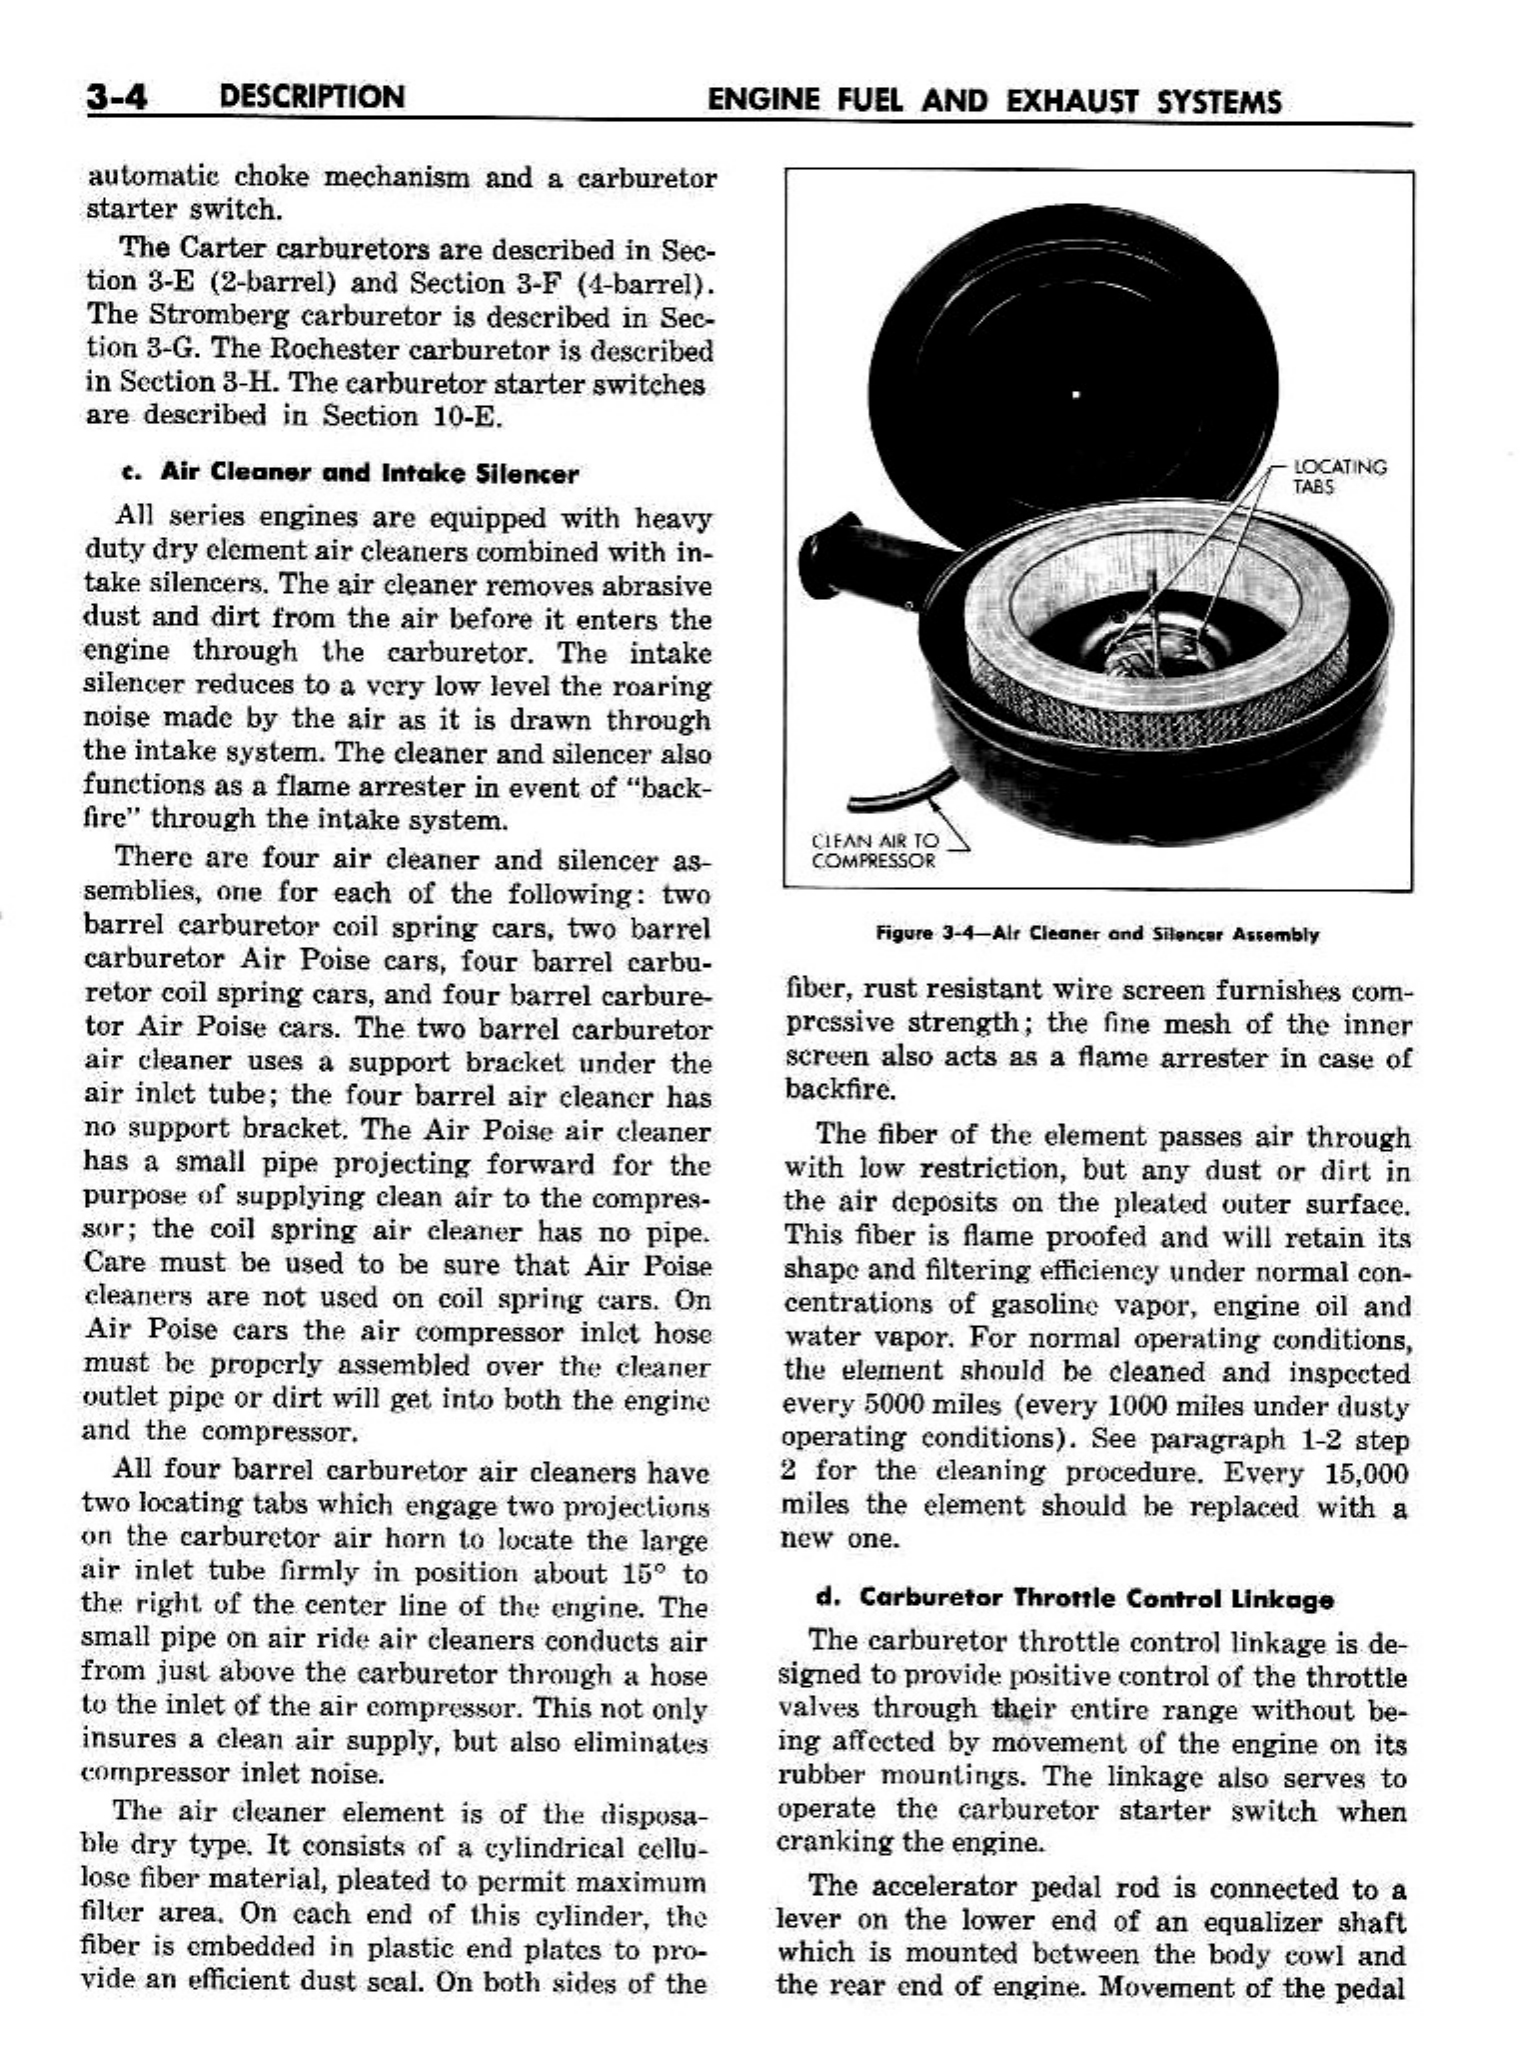 n_04 1958 Buick Shop Manual - Engine Fuel & Exhaust_4.jpg